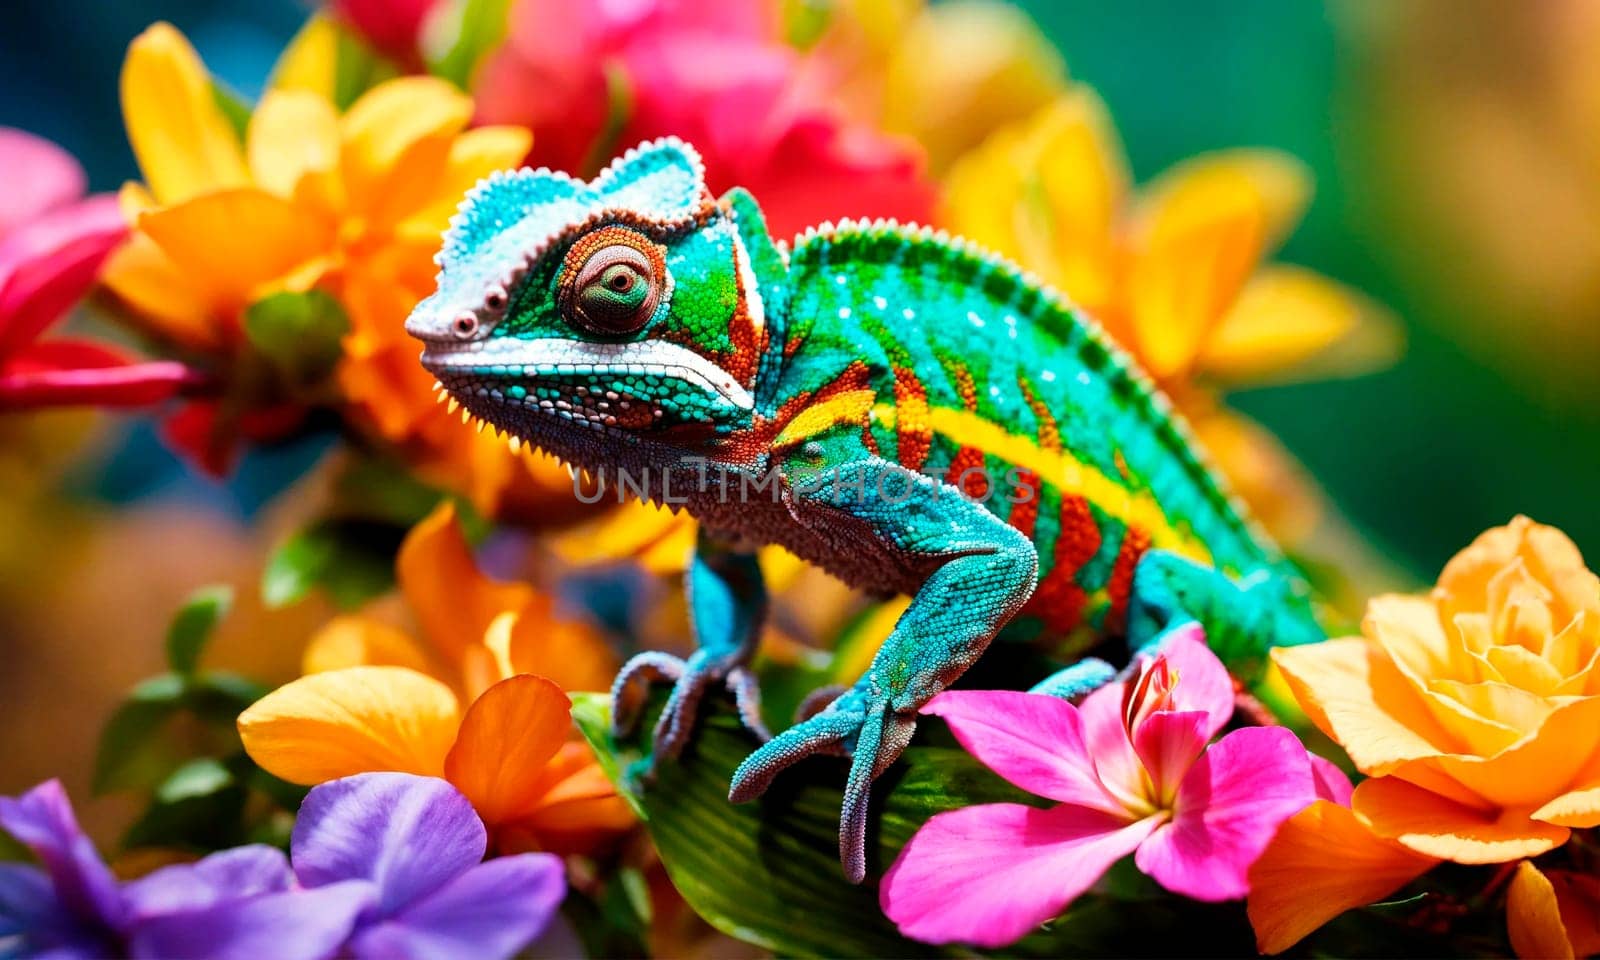 chameleon on tropical flowers. Selective focus. by yanadjana